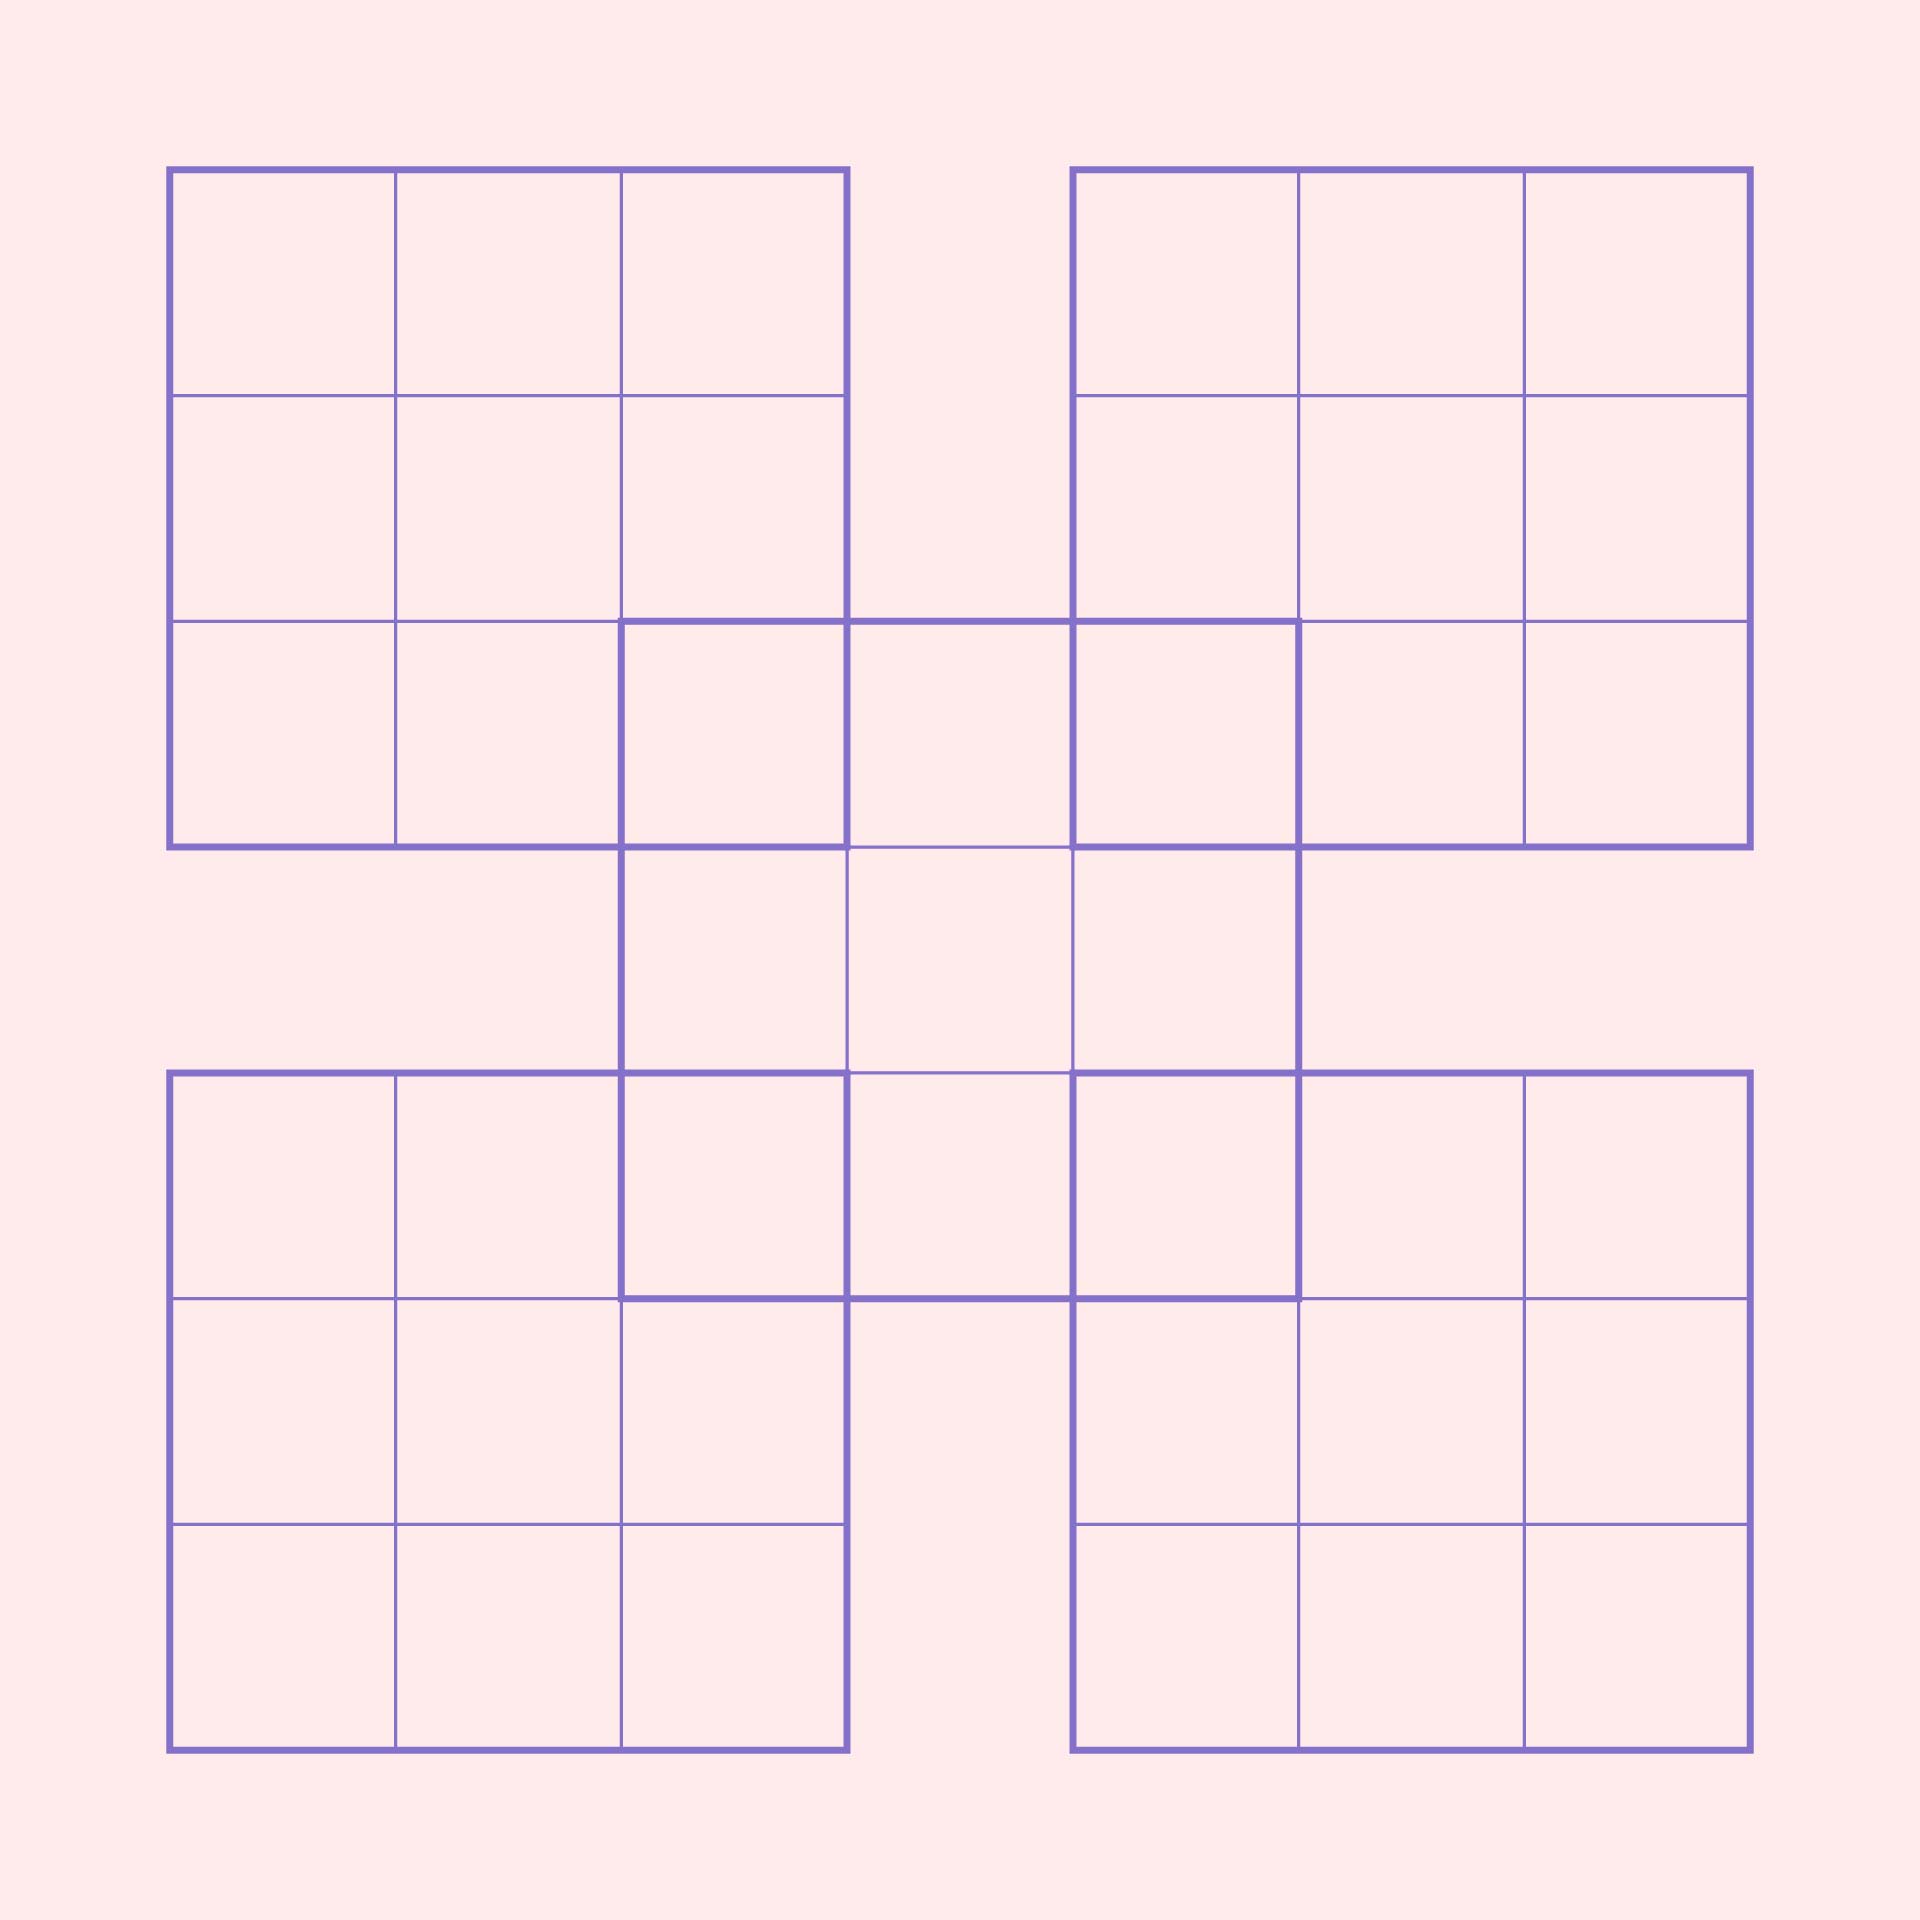 Printable Sudoku Grid